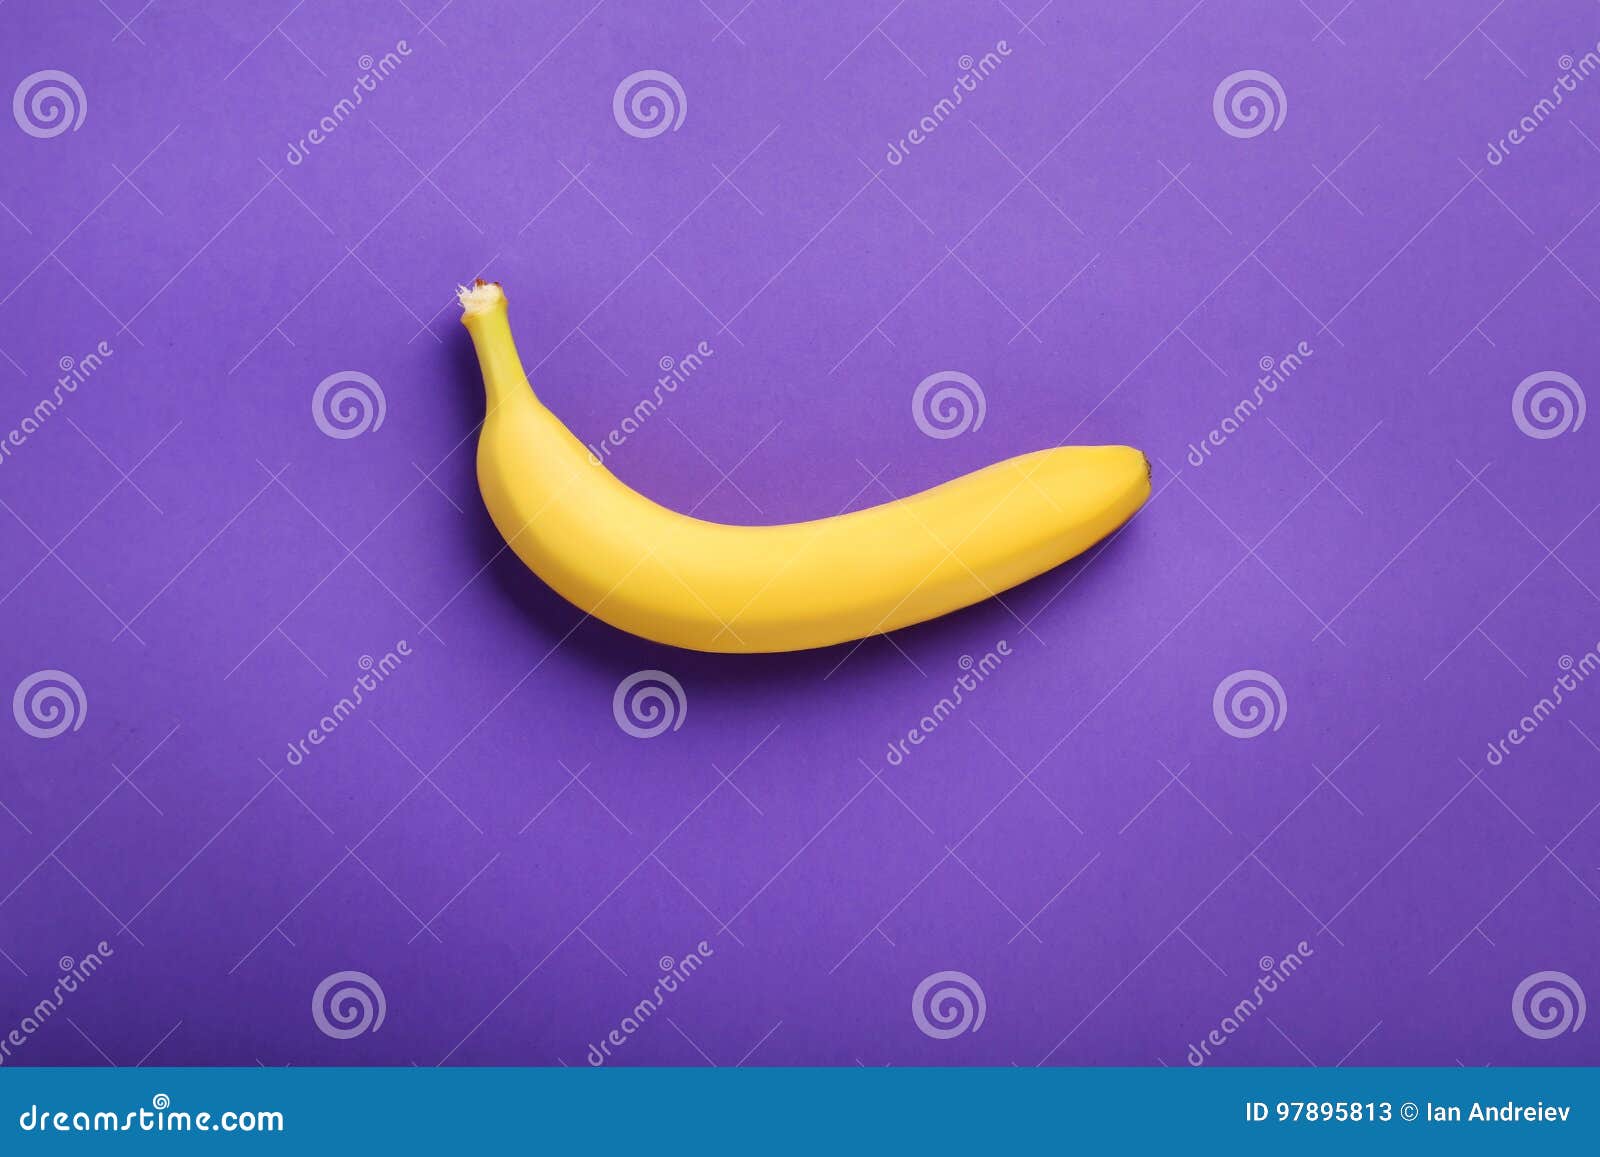 Свит банана. Фиолетовый банан. Банан на фиолетовом фоне. Сиреневый банан. Сладкий банан.